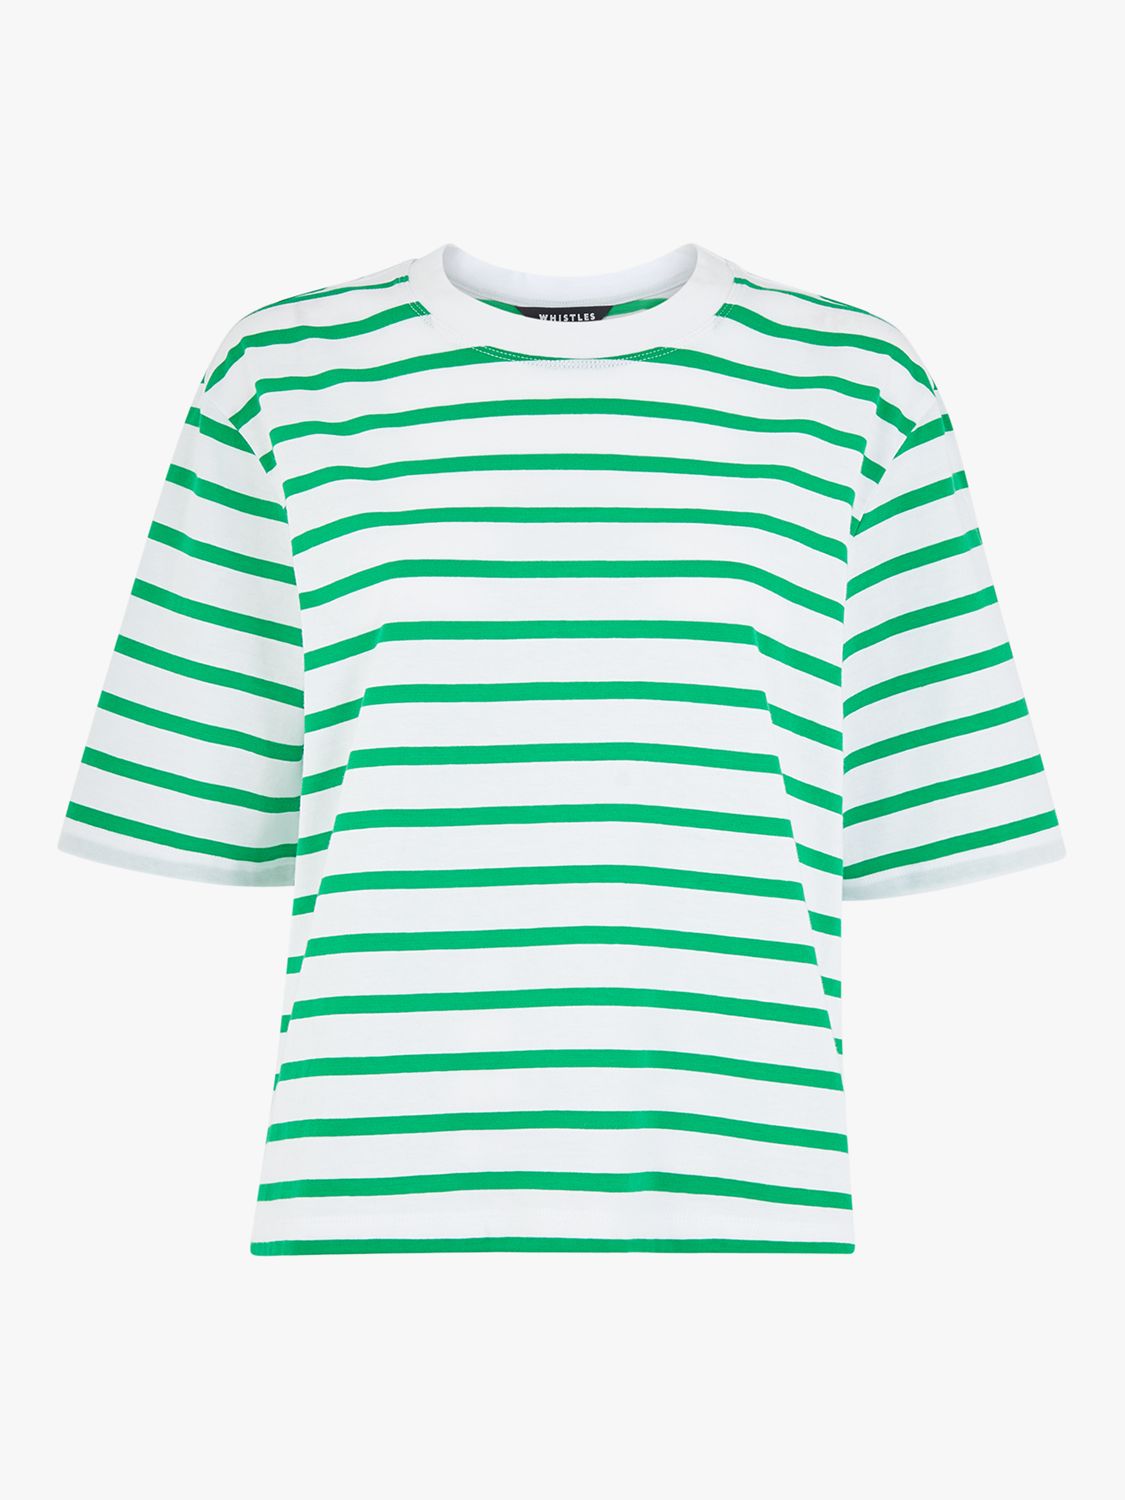 Whistles Stripe Short Sleeve Top, Green/Multi, L